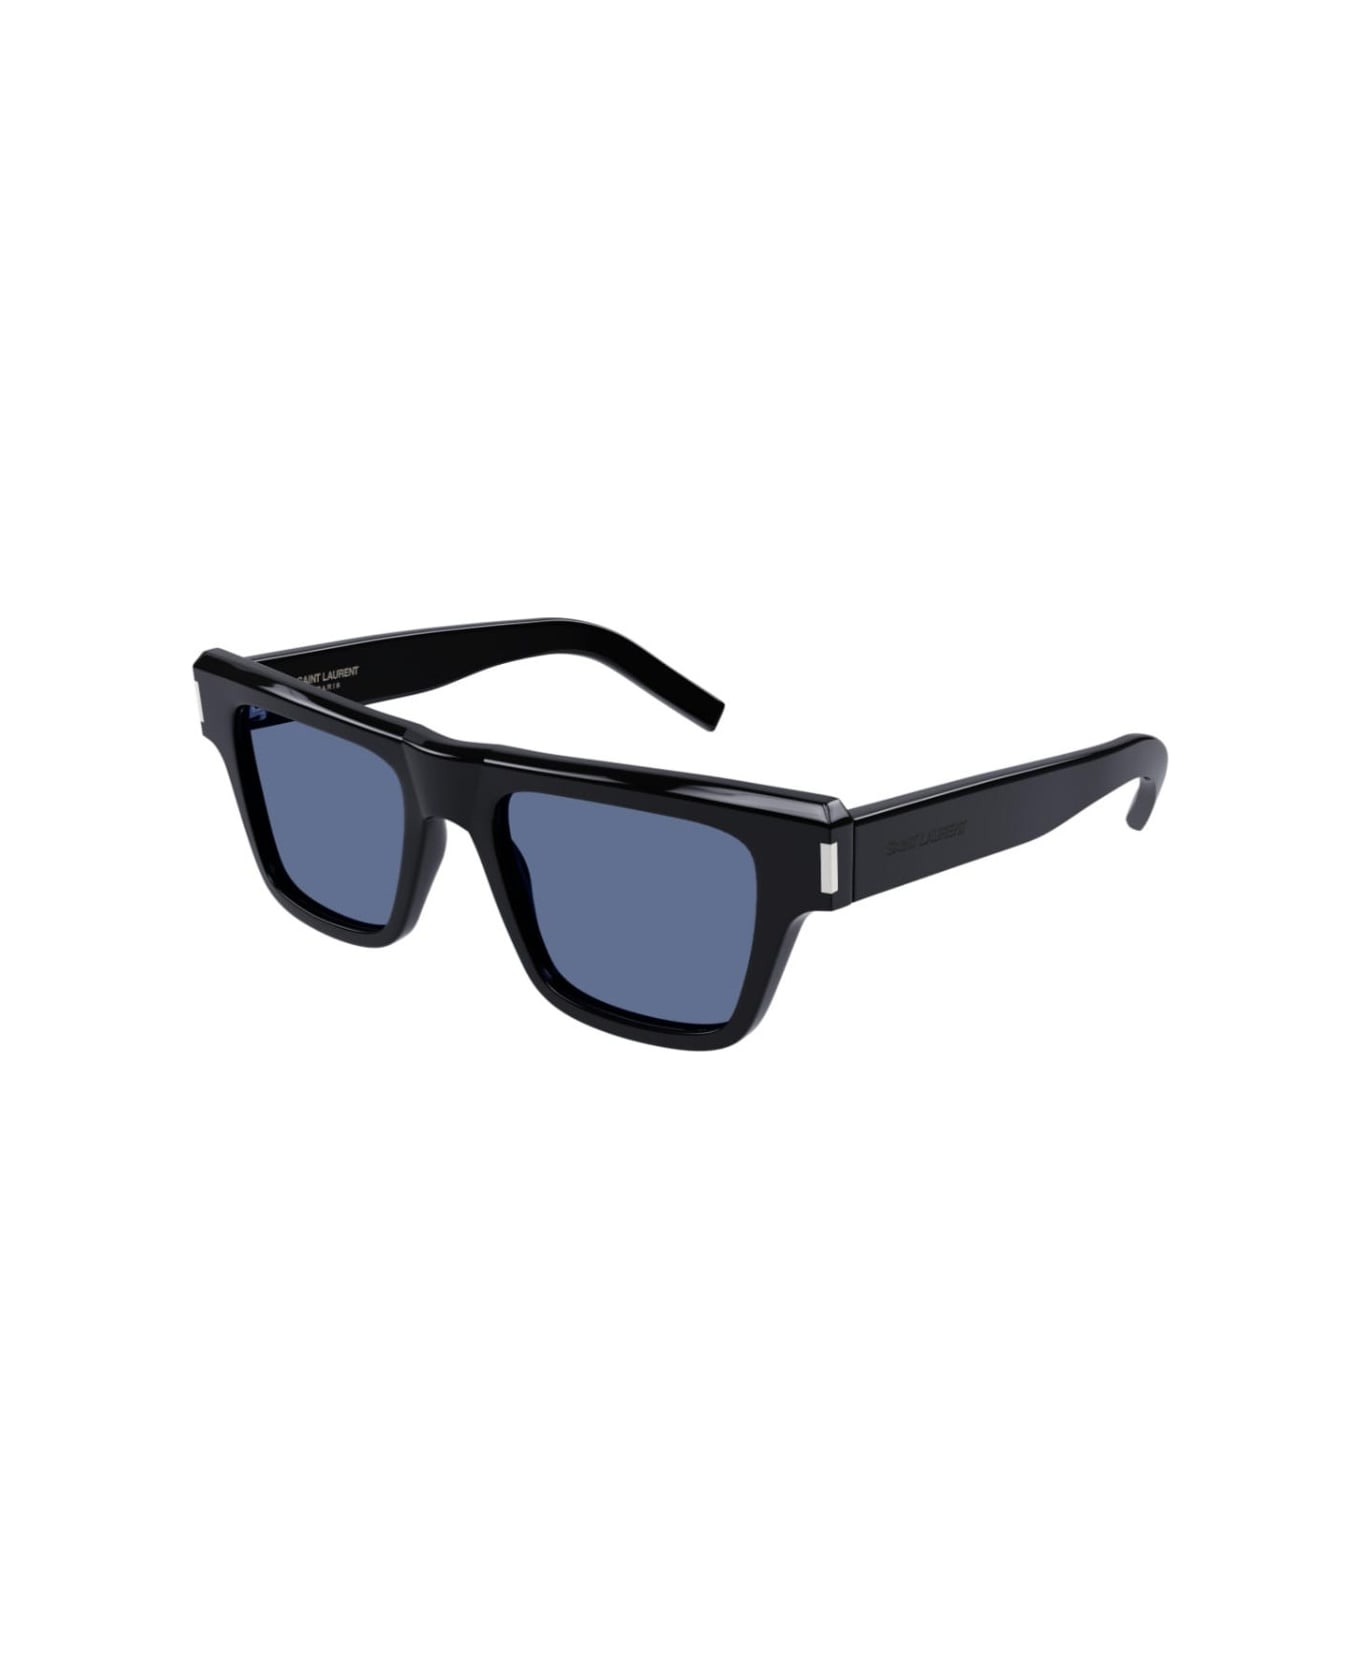 Saint Laurent Eyewear sl 269 005 Sunglasses - Nero